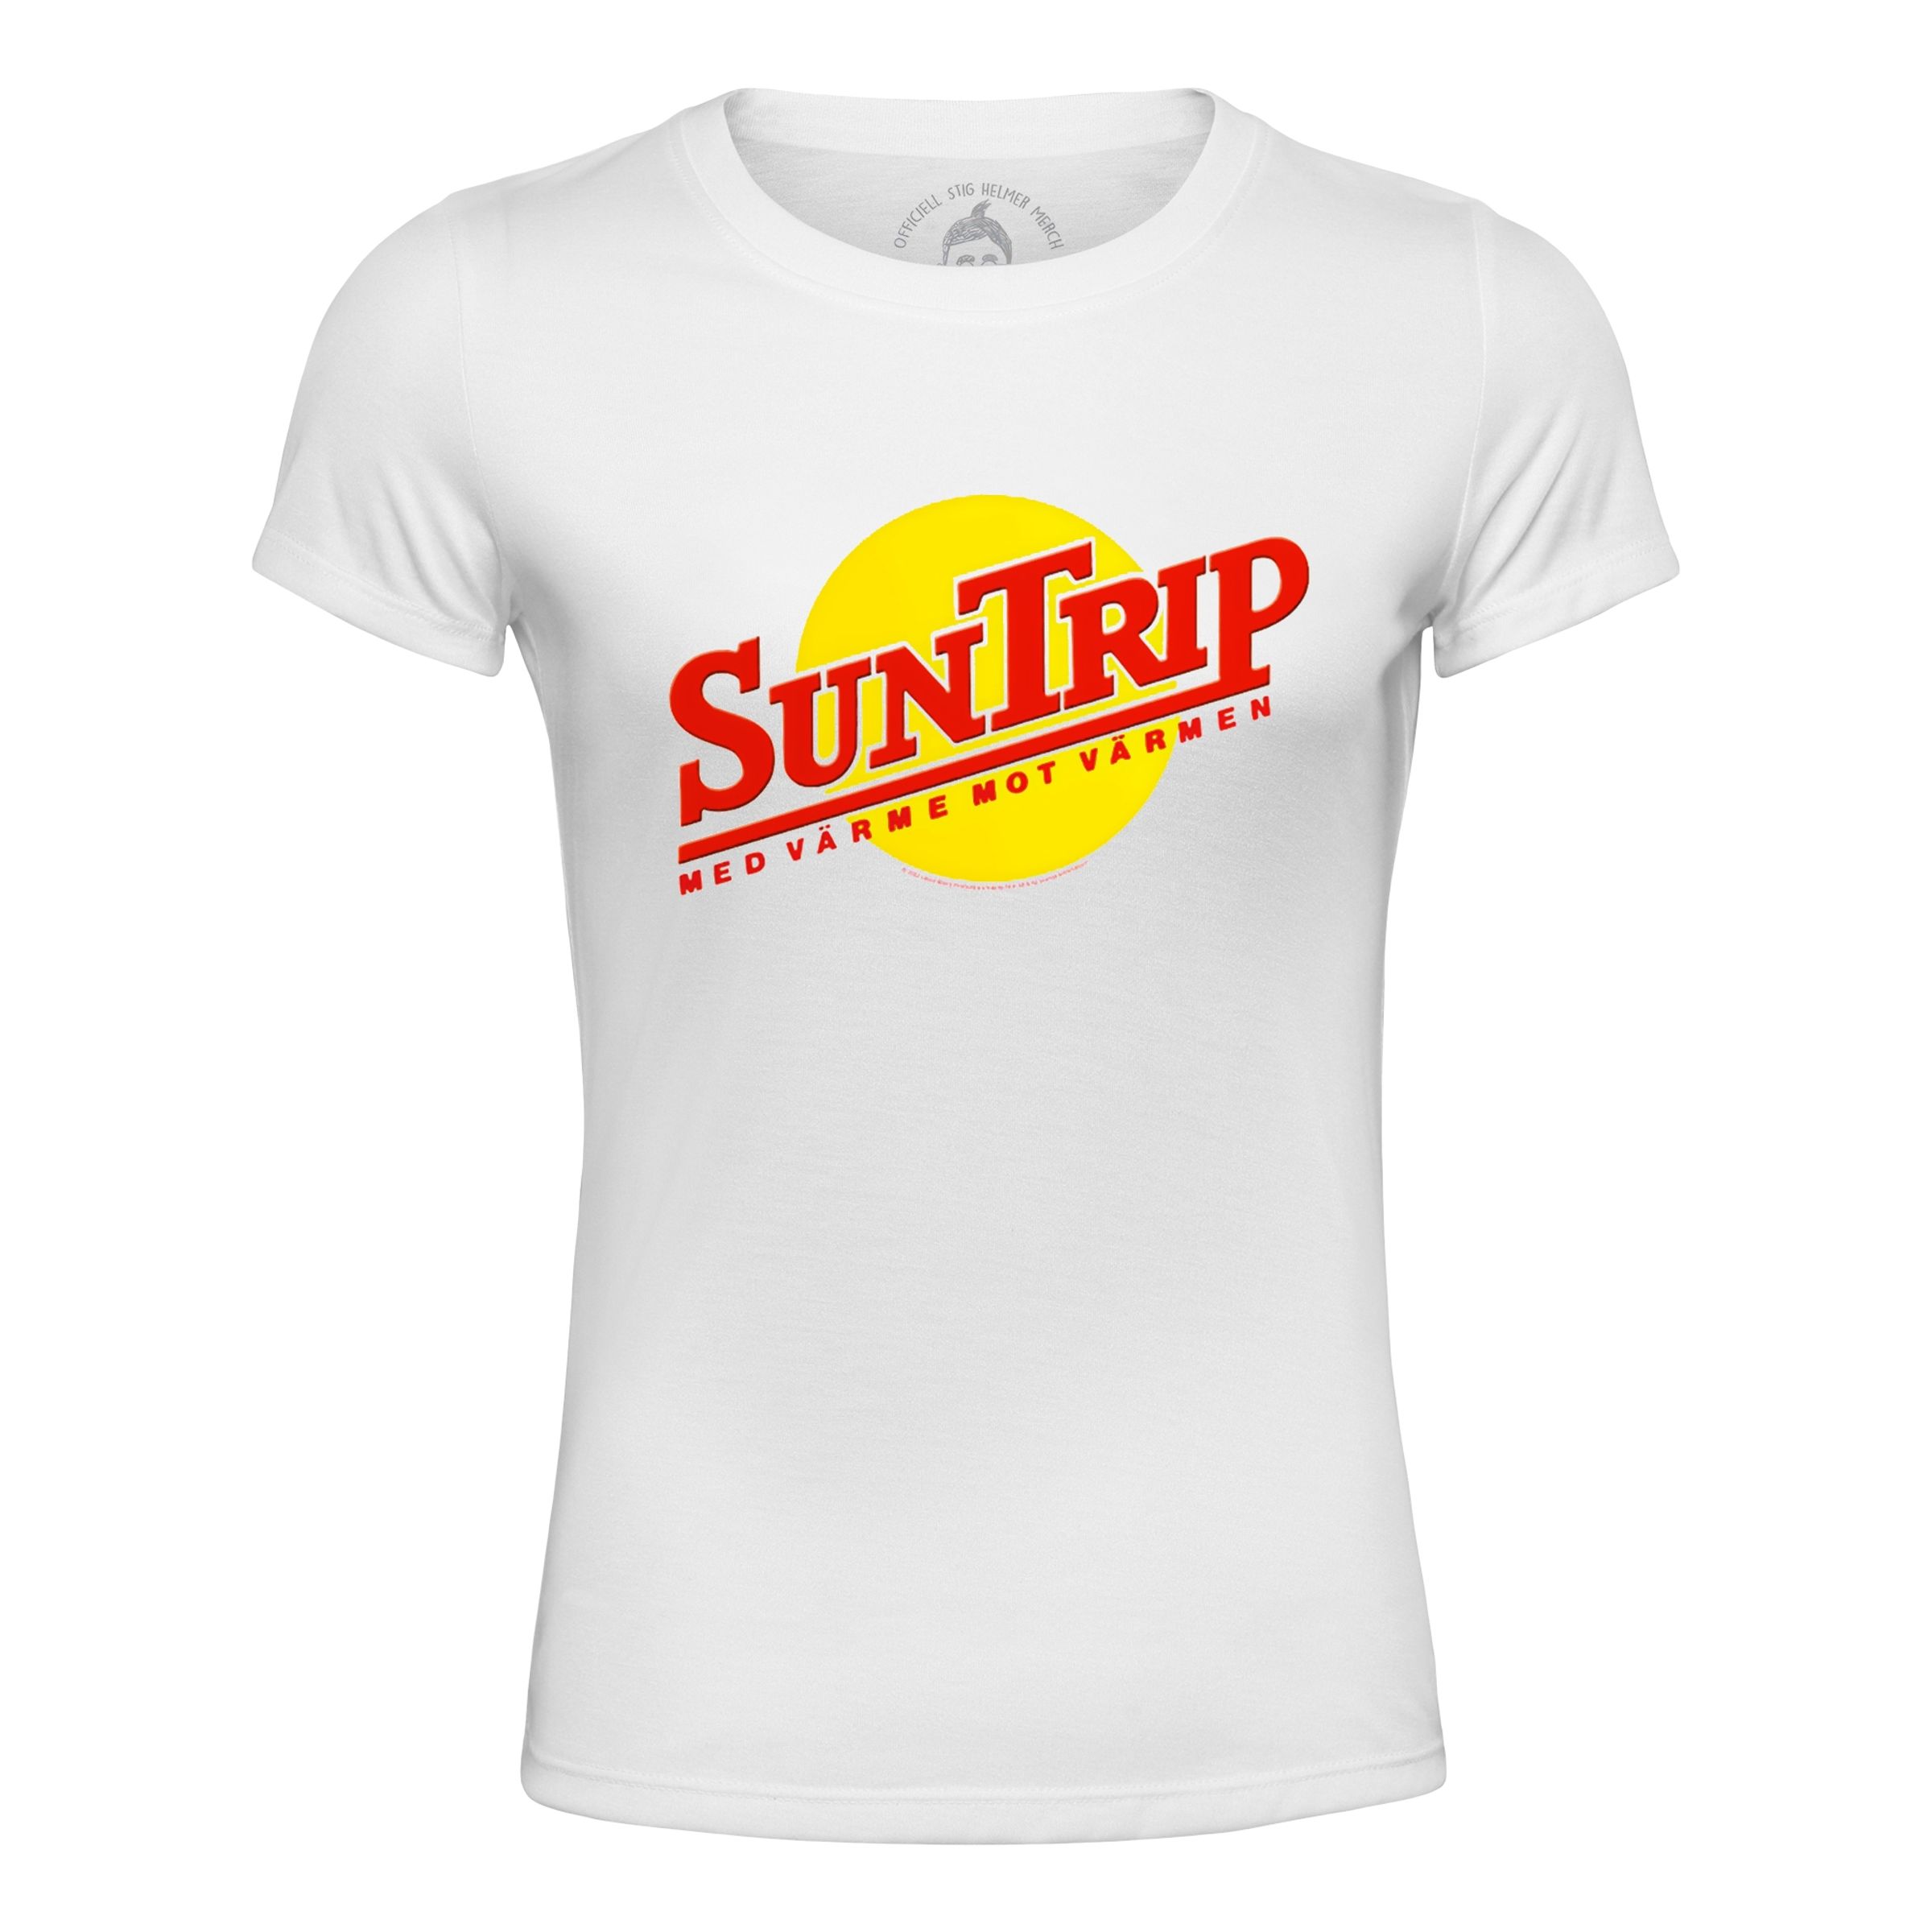 SunTrip Dam T-shirt - Small